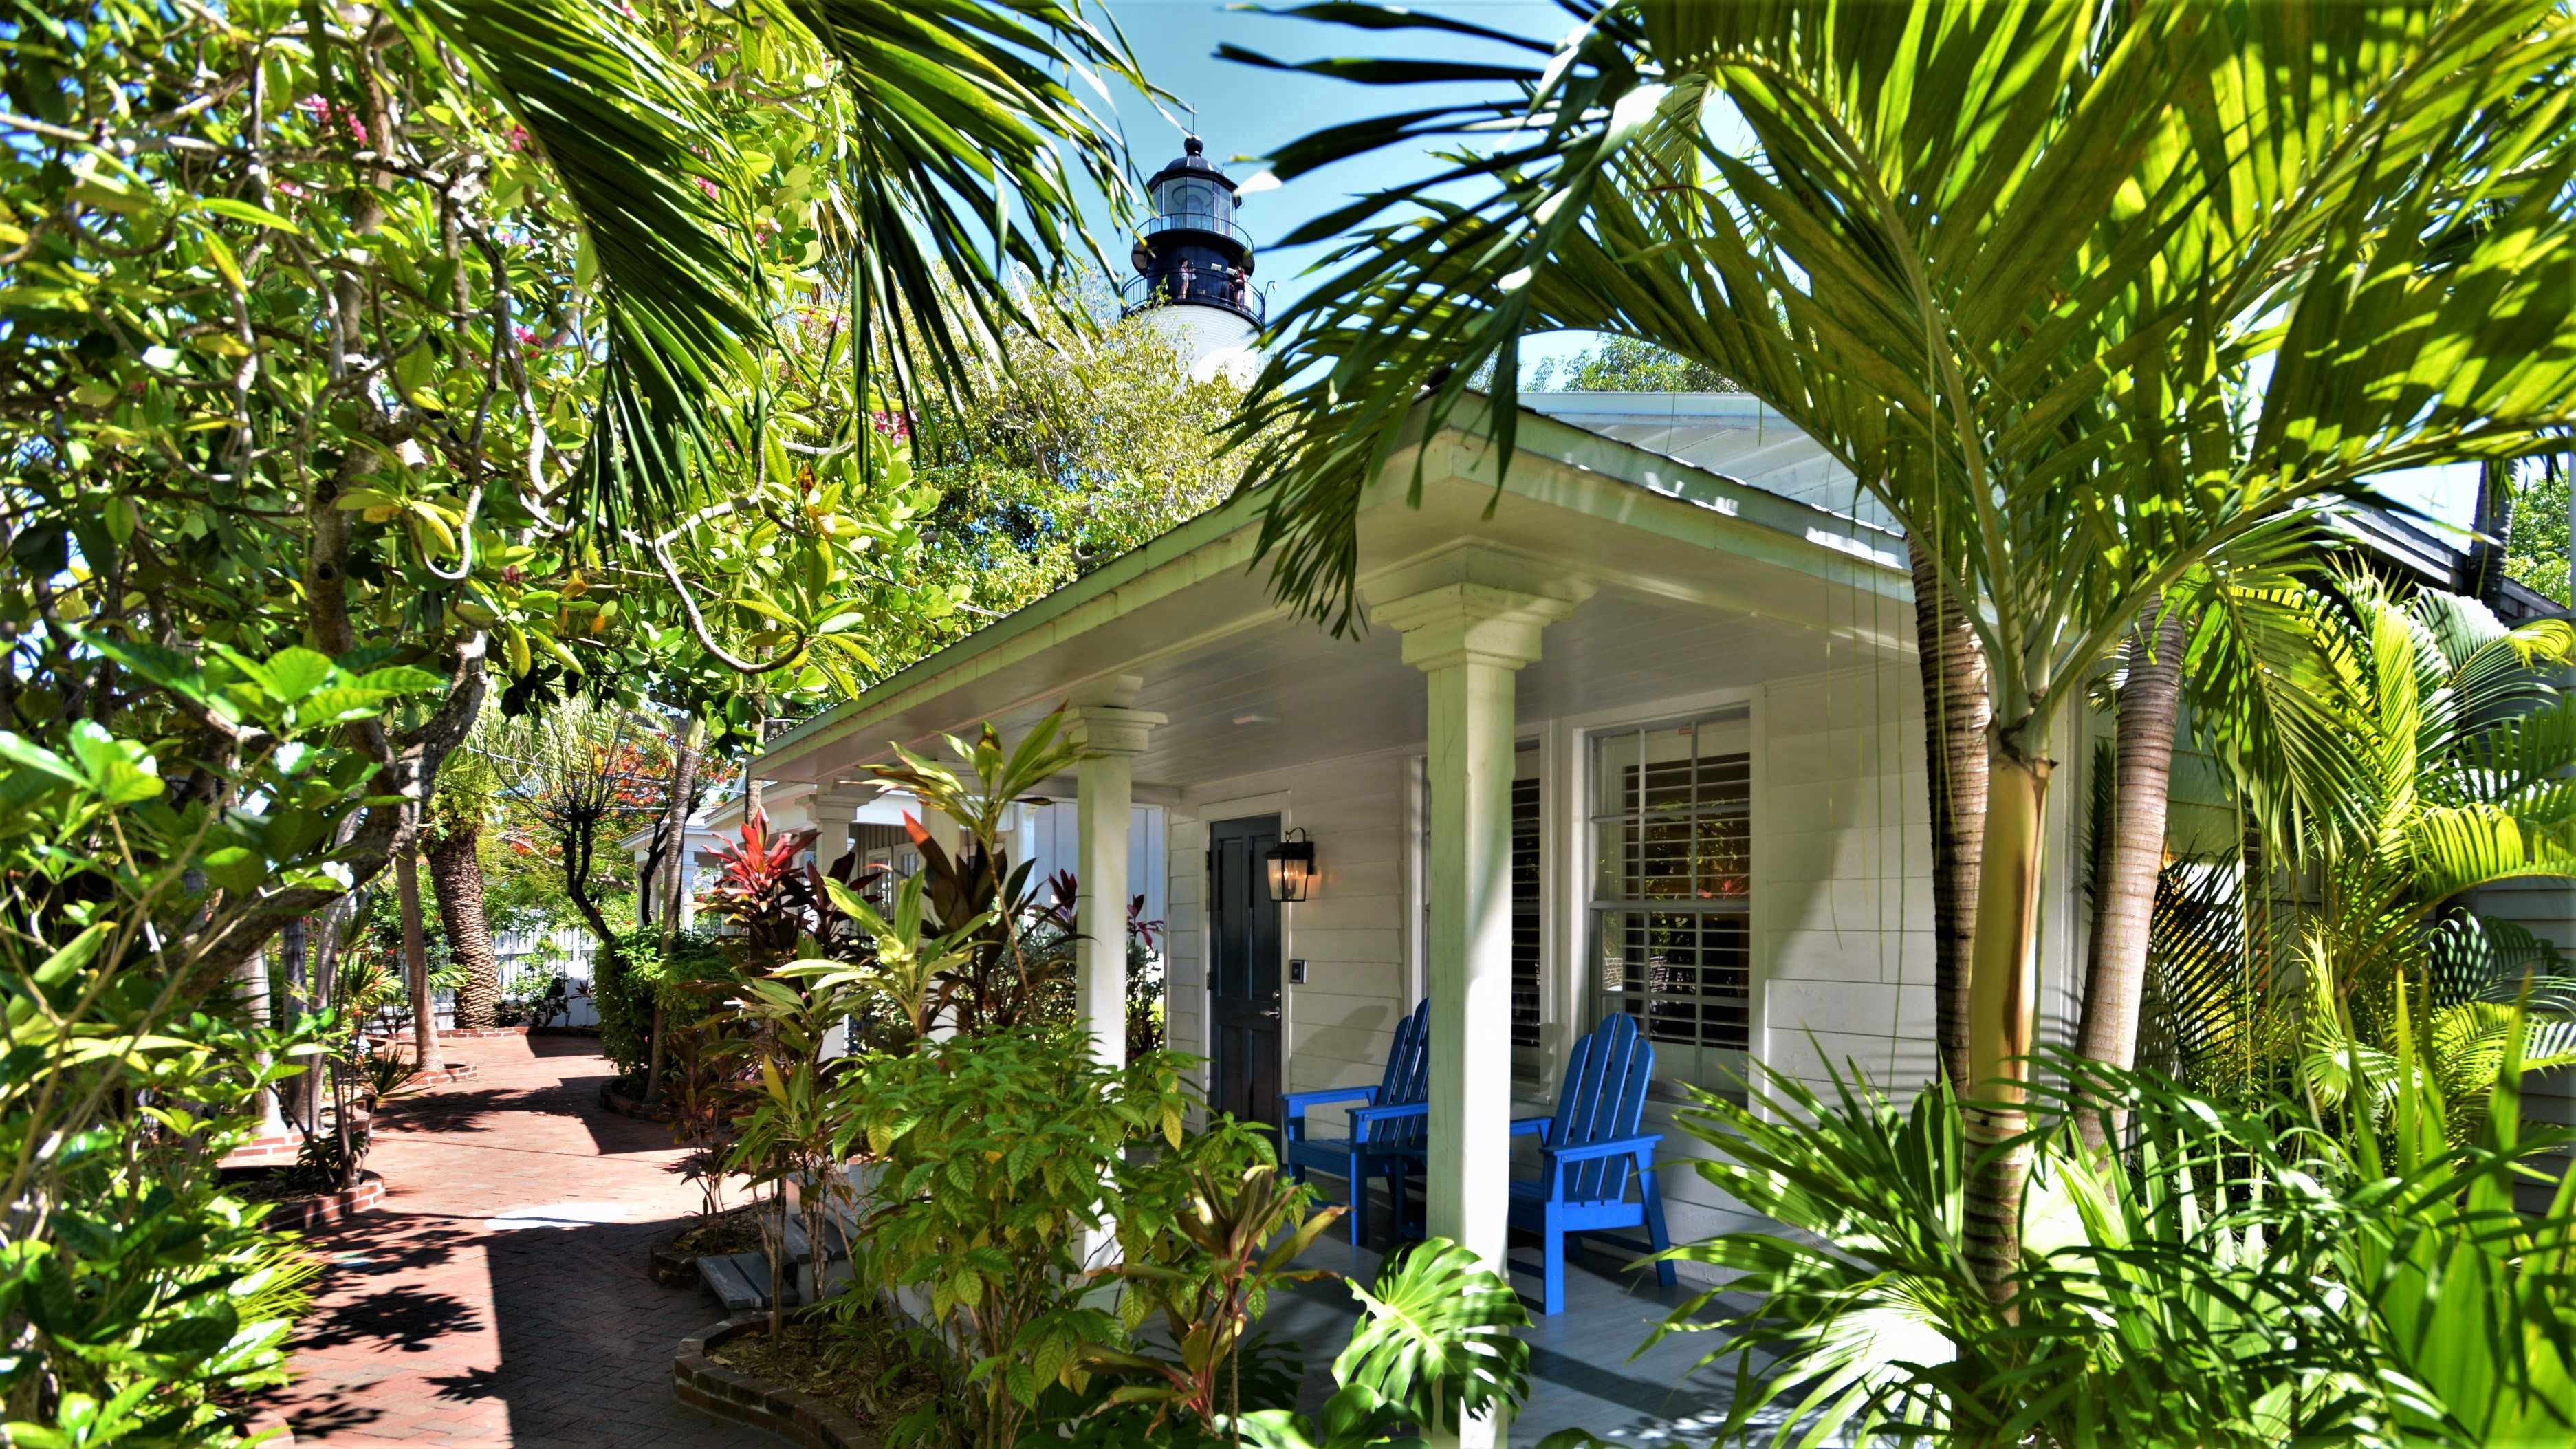 Historic Key West Inns - Key West - Lighthouse Court Hotel - Cottages